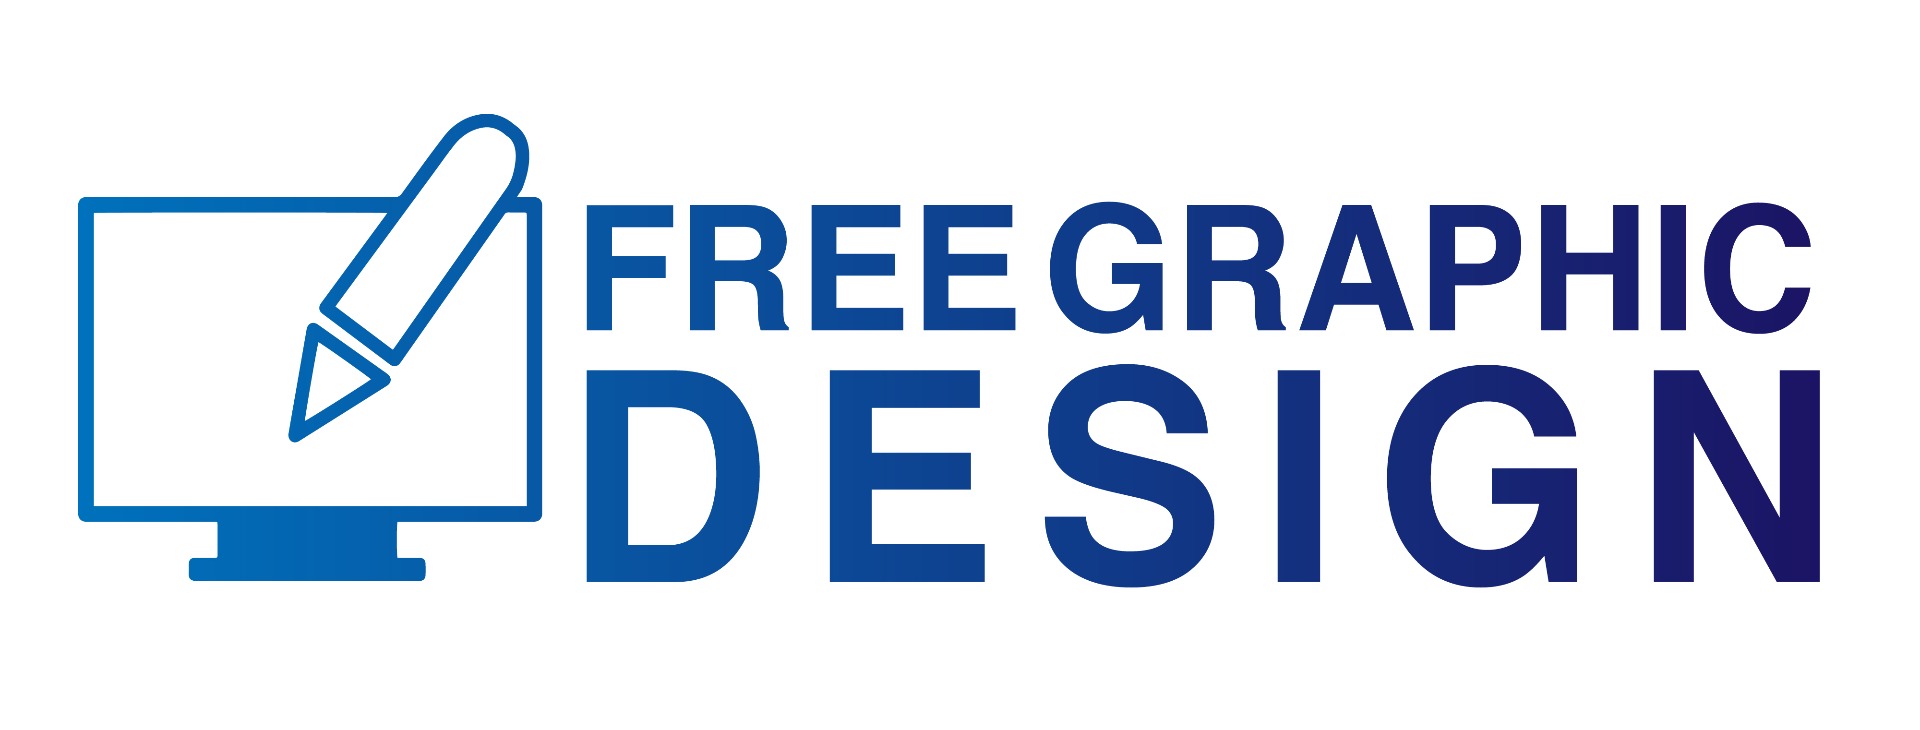 FREE Graphic Design Banner